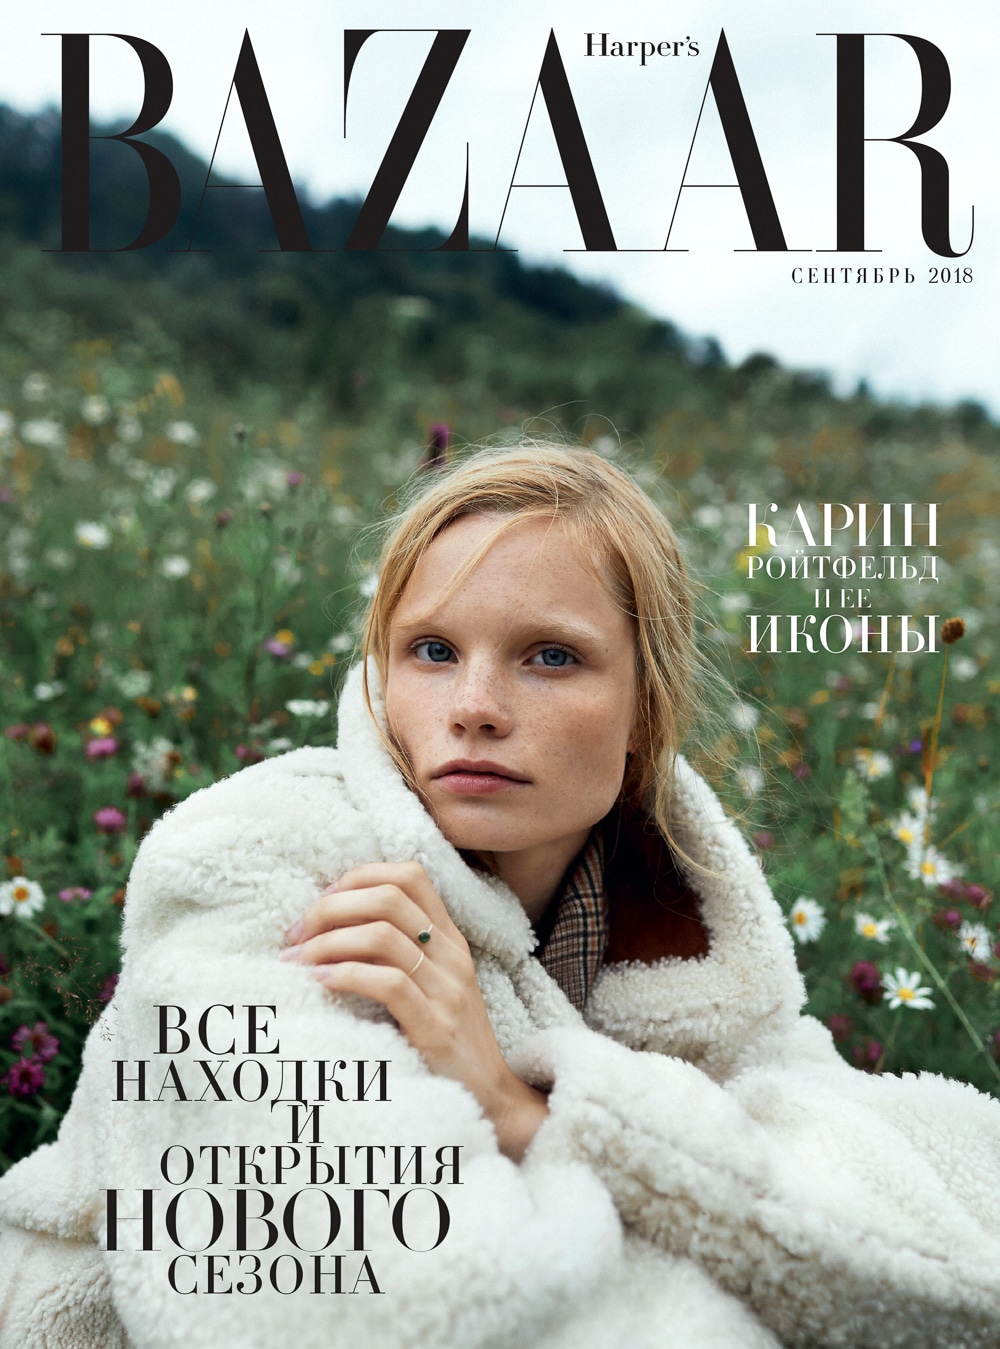 Harpers-Bazaar-Polina-Oganicheva-Stephan-Lisowski-1-2.jpg